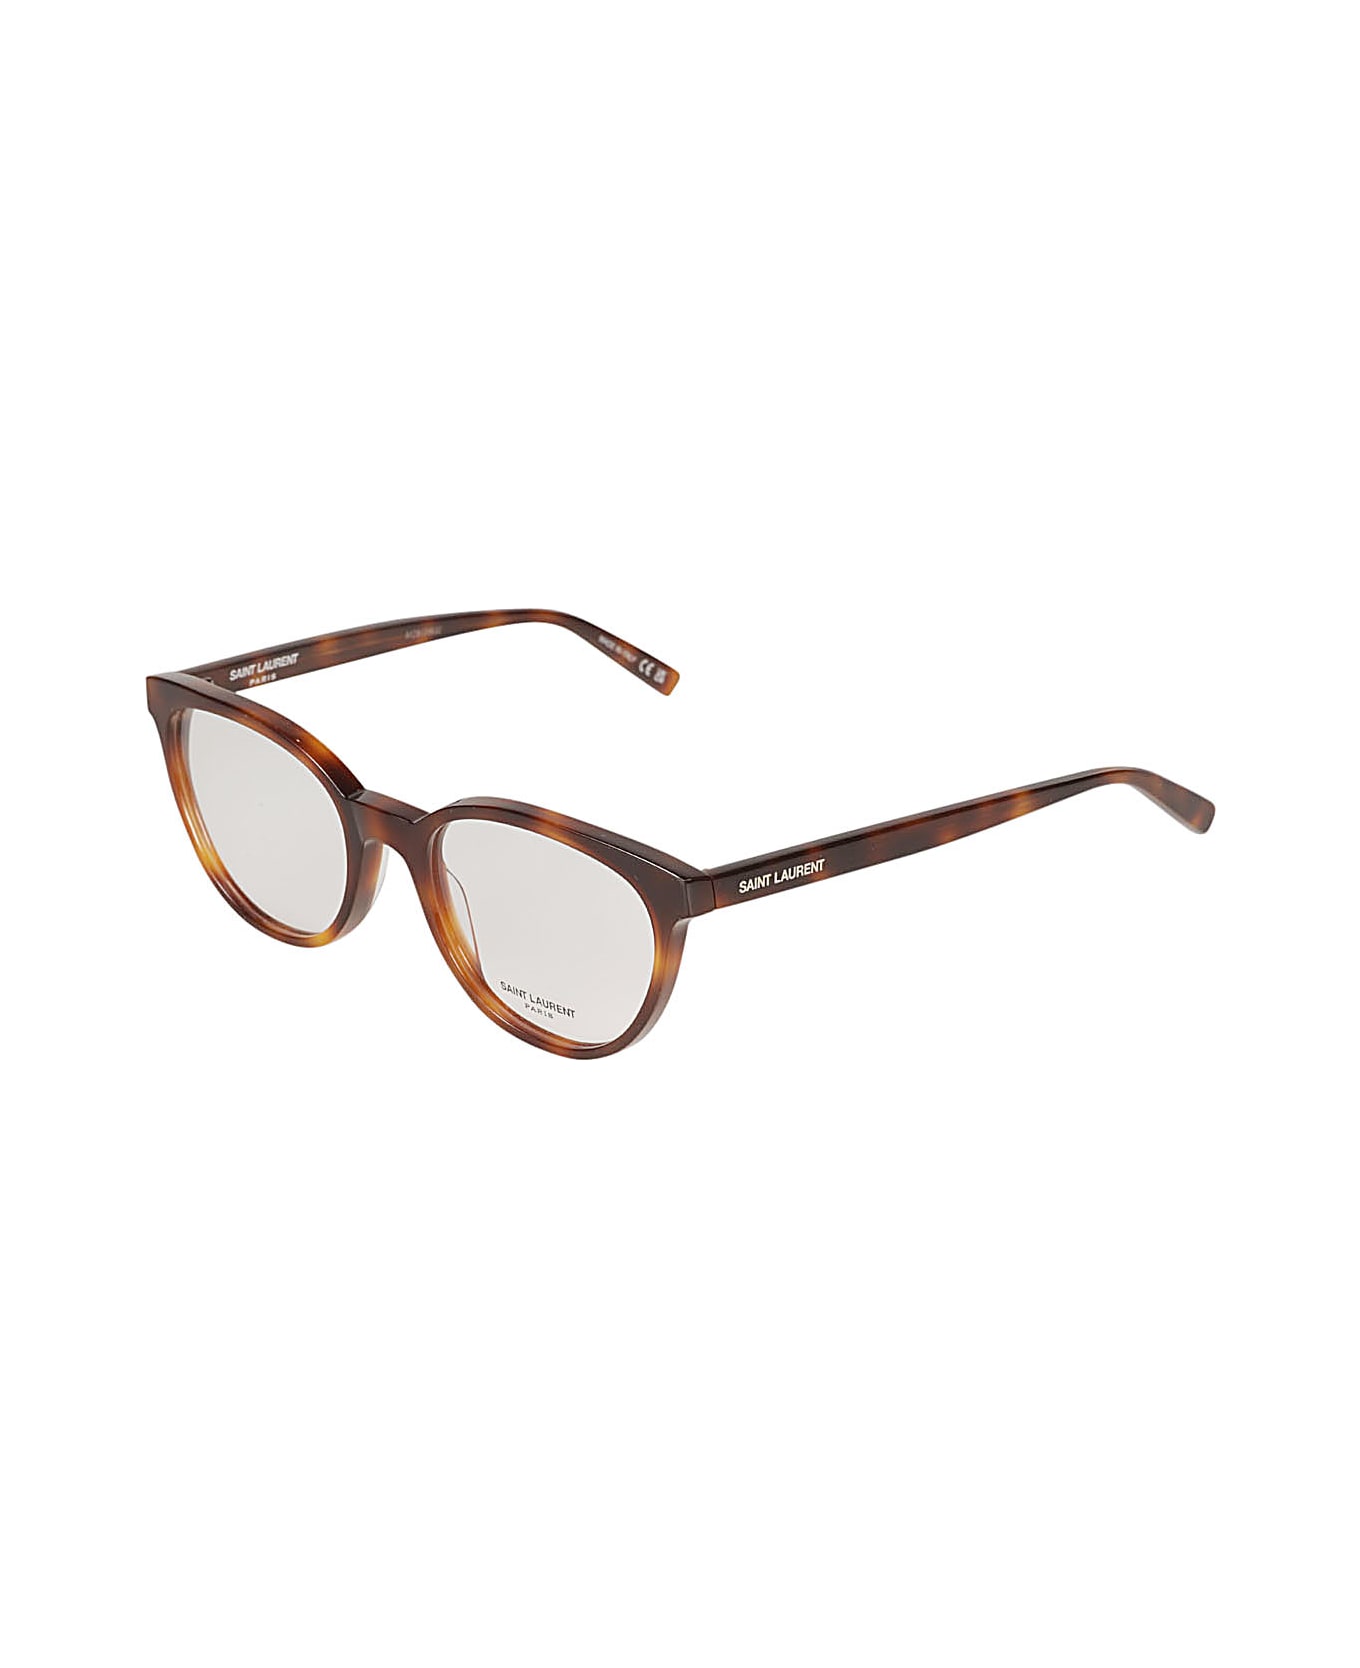 Saint Laurent Eyewear Round Frame Flame Effect Glasses - Havana/Transparent